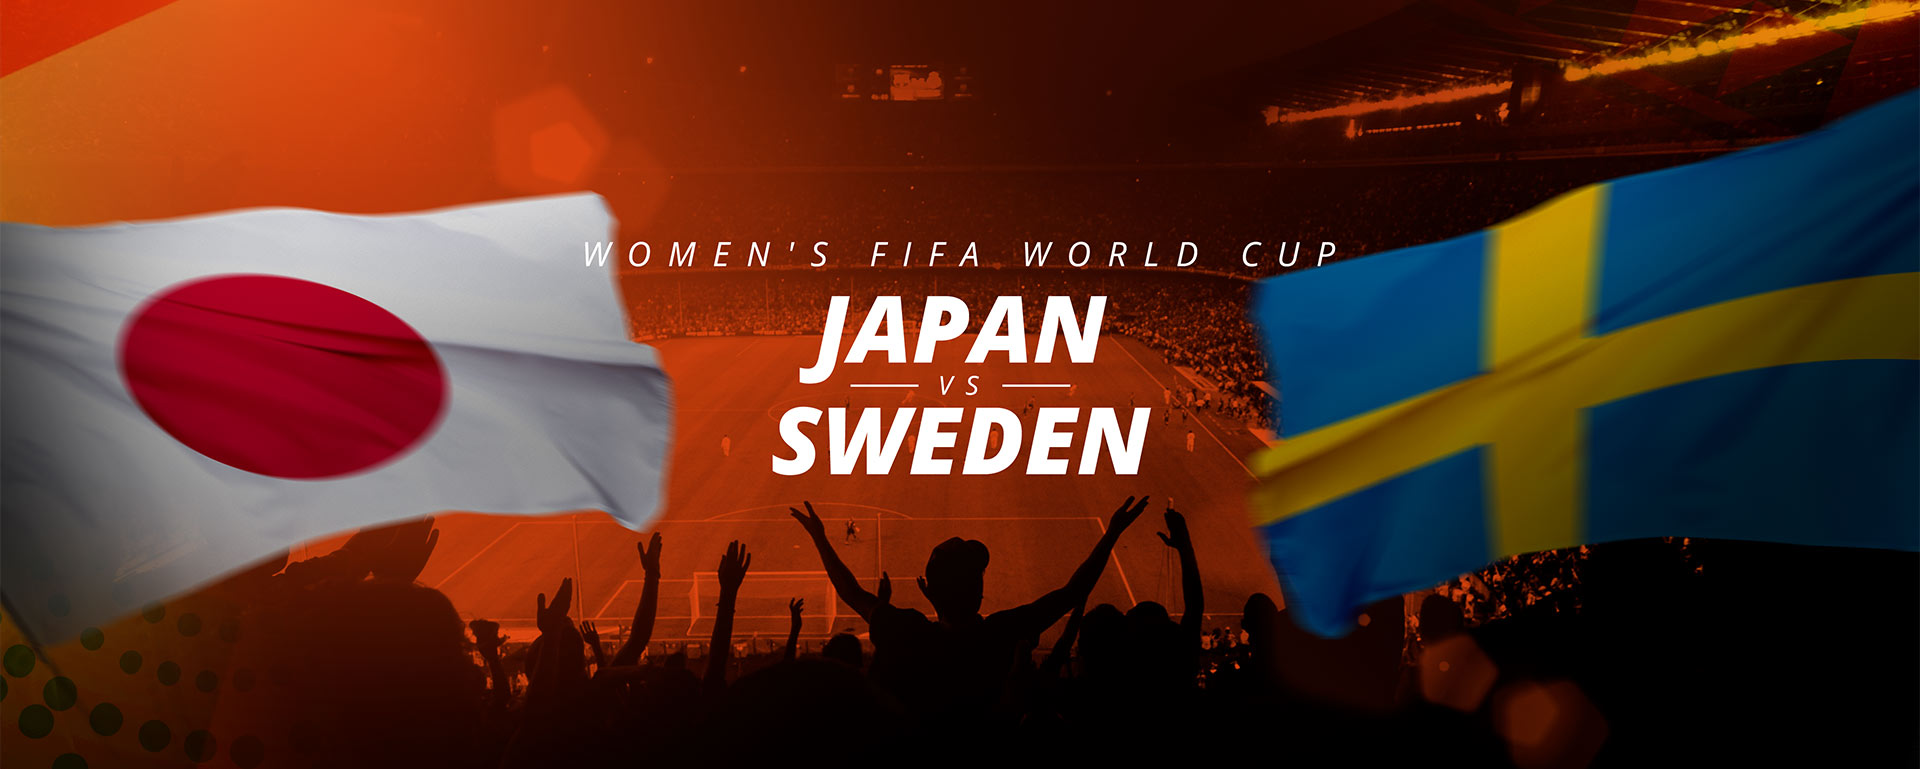 WOMEN’S WORLD CUP: JAPAN V SWEDEN PREVIEW